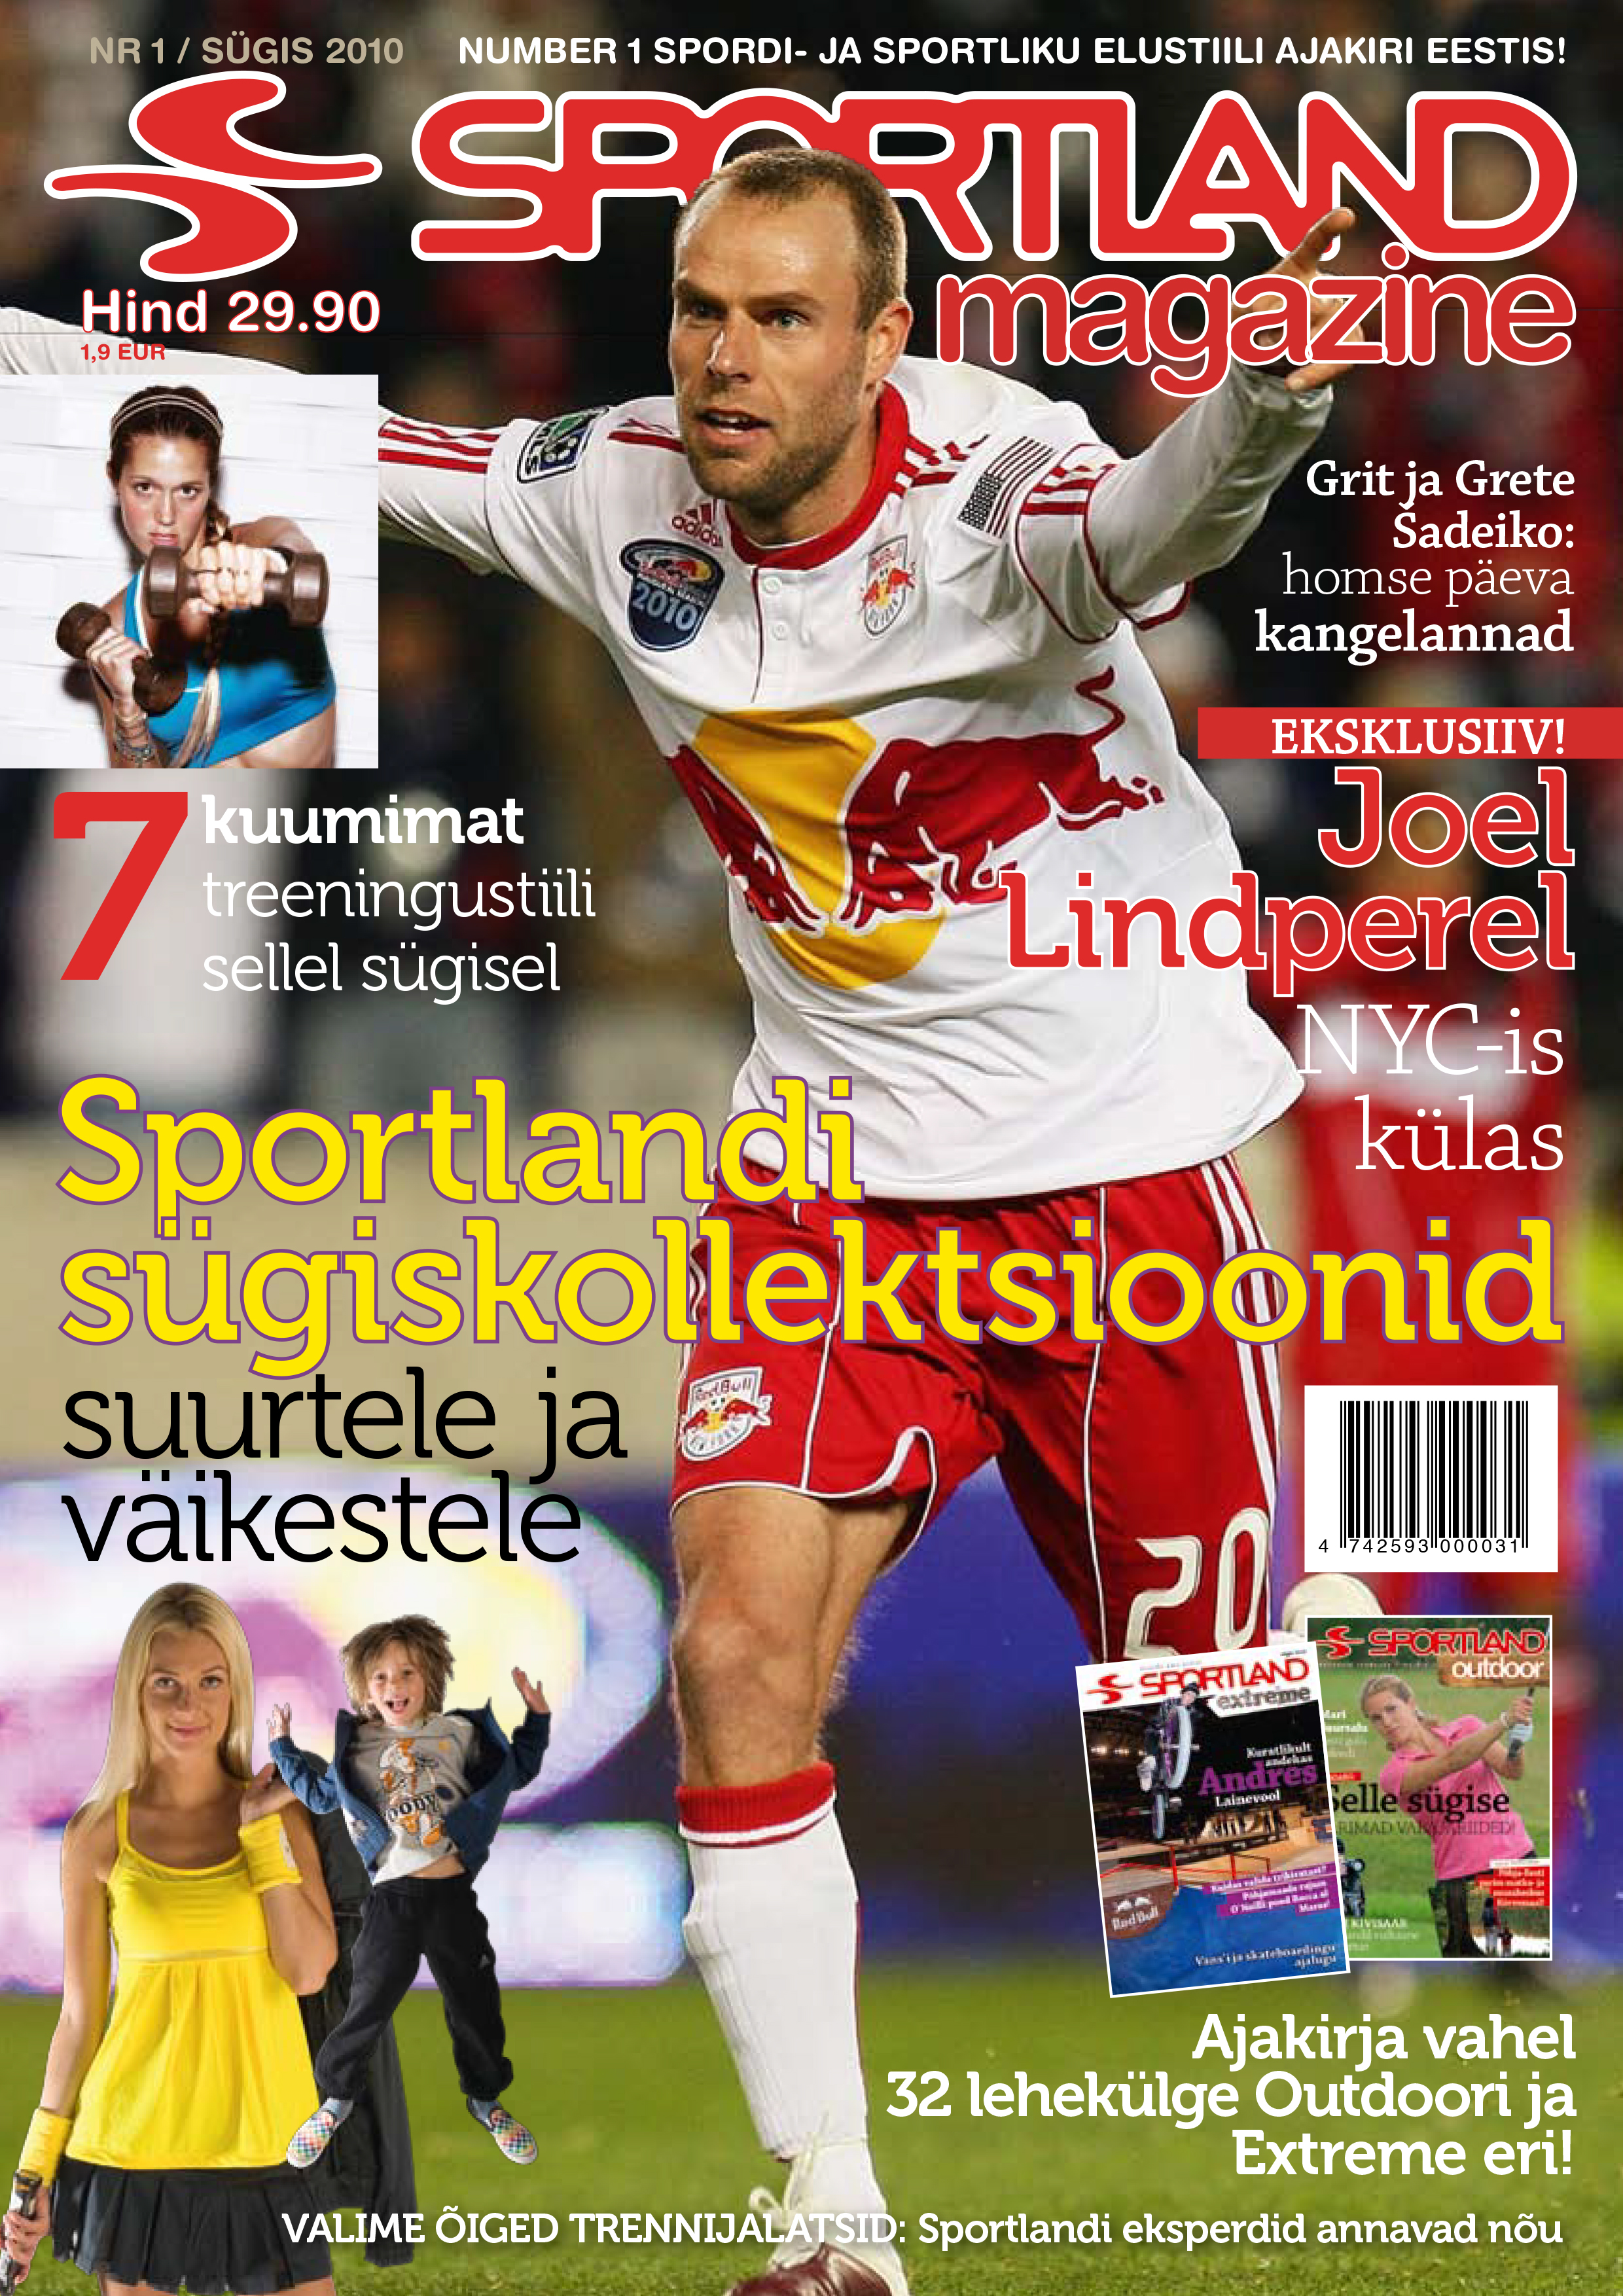 Sportland Magazine 20